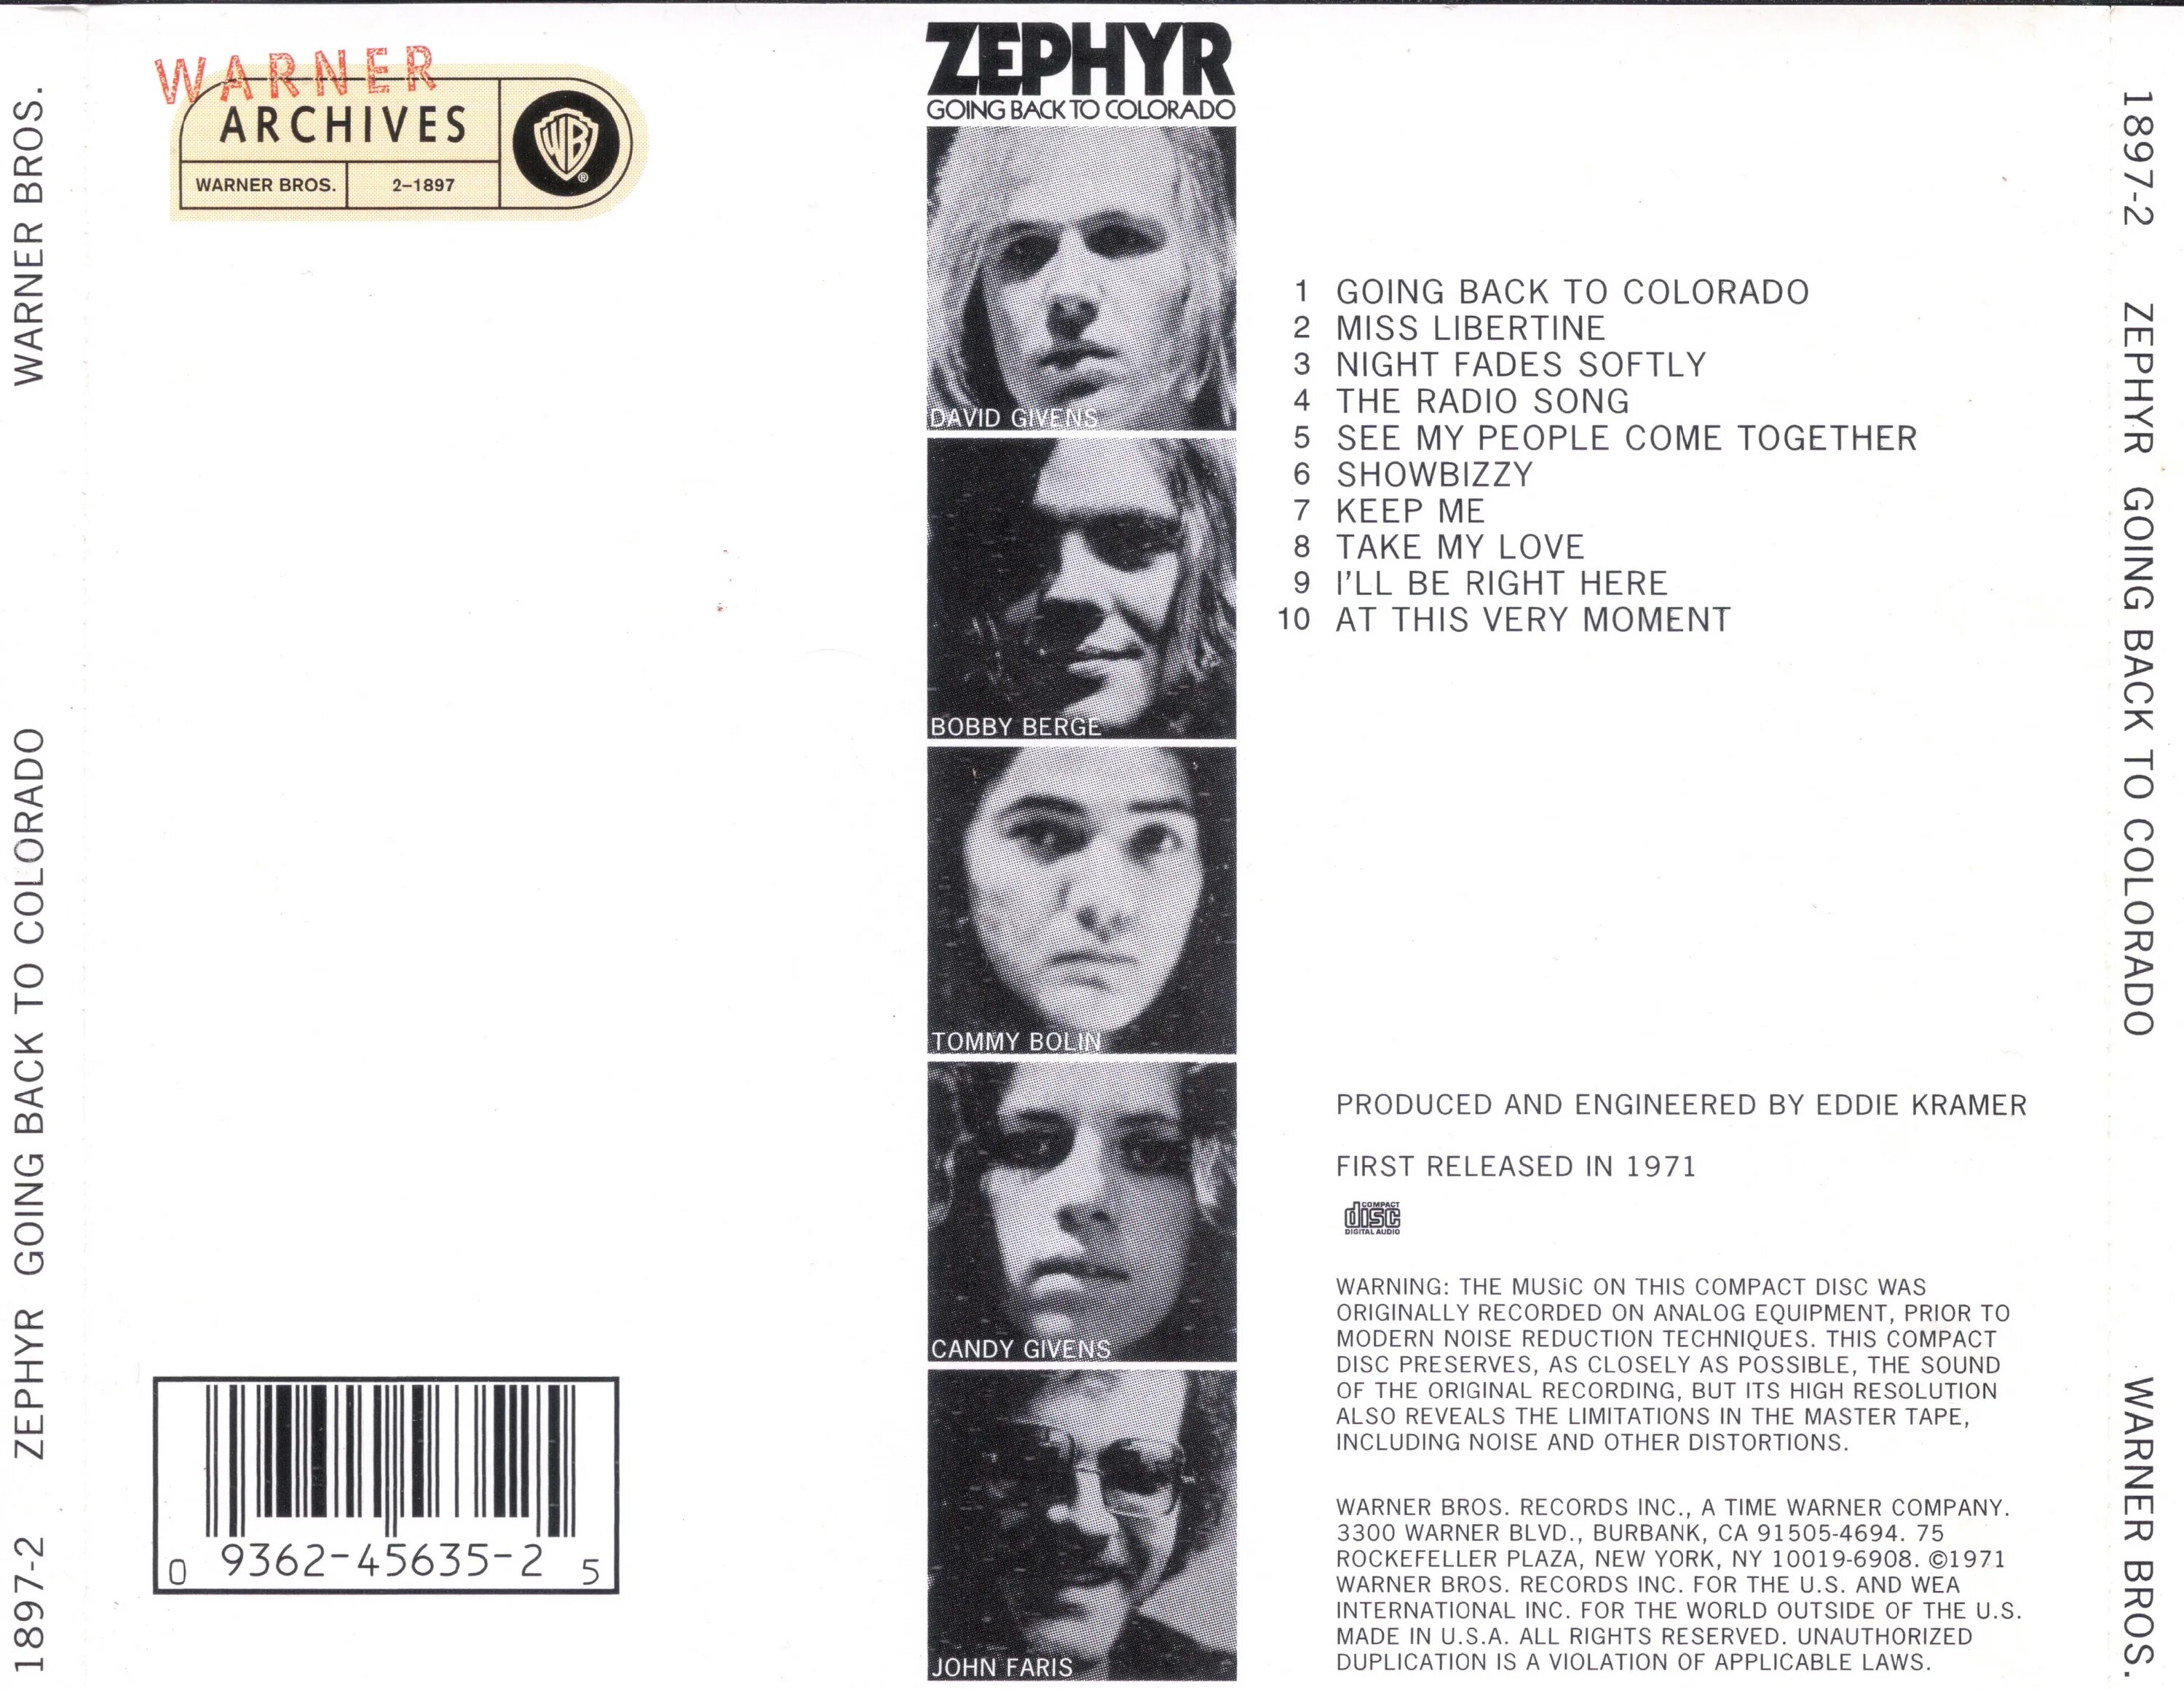 Zephyr 1971. Zephyr - going back to Colorado. Zephyr - going back to Colorado 1971. Going back. Going back песня